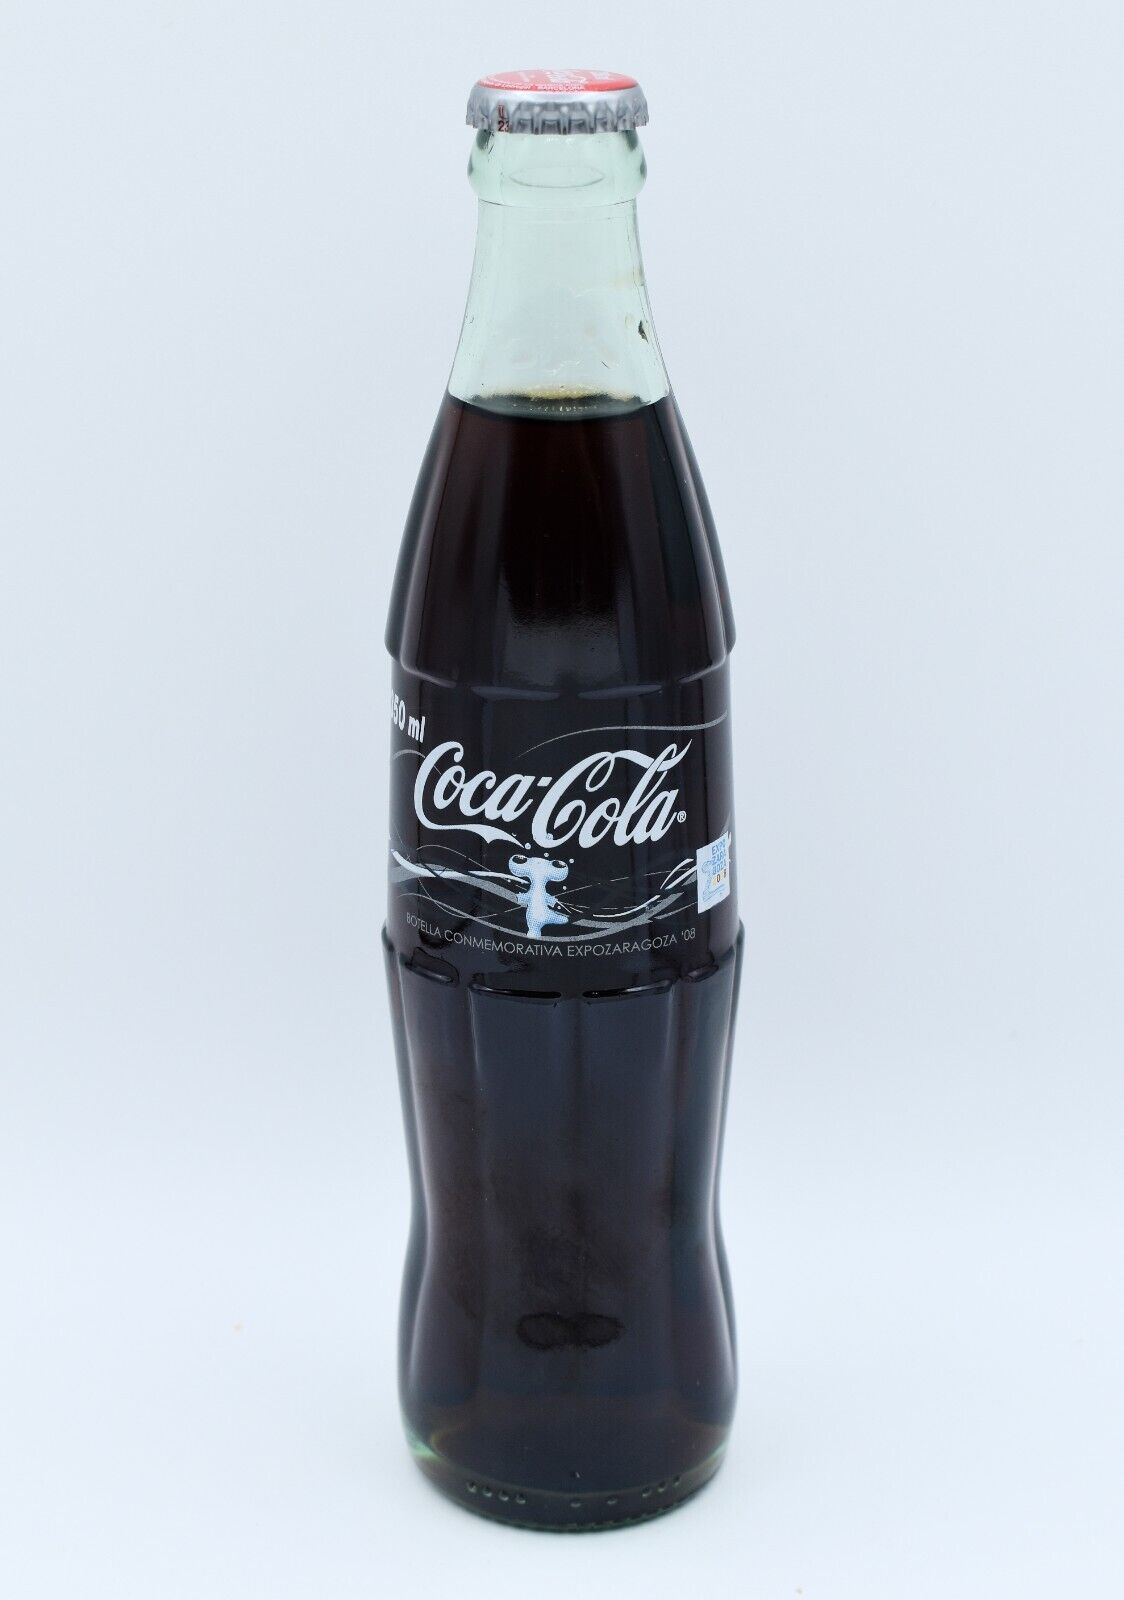 *HTF EXPO 2008 Zaragoza, Spain Commemorative Coca Cola Bottle Only 2400 made